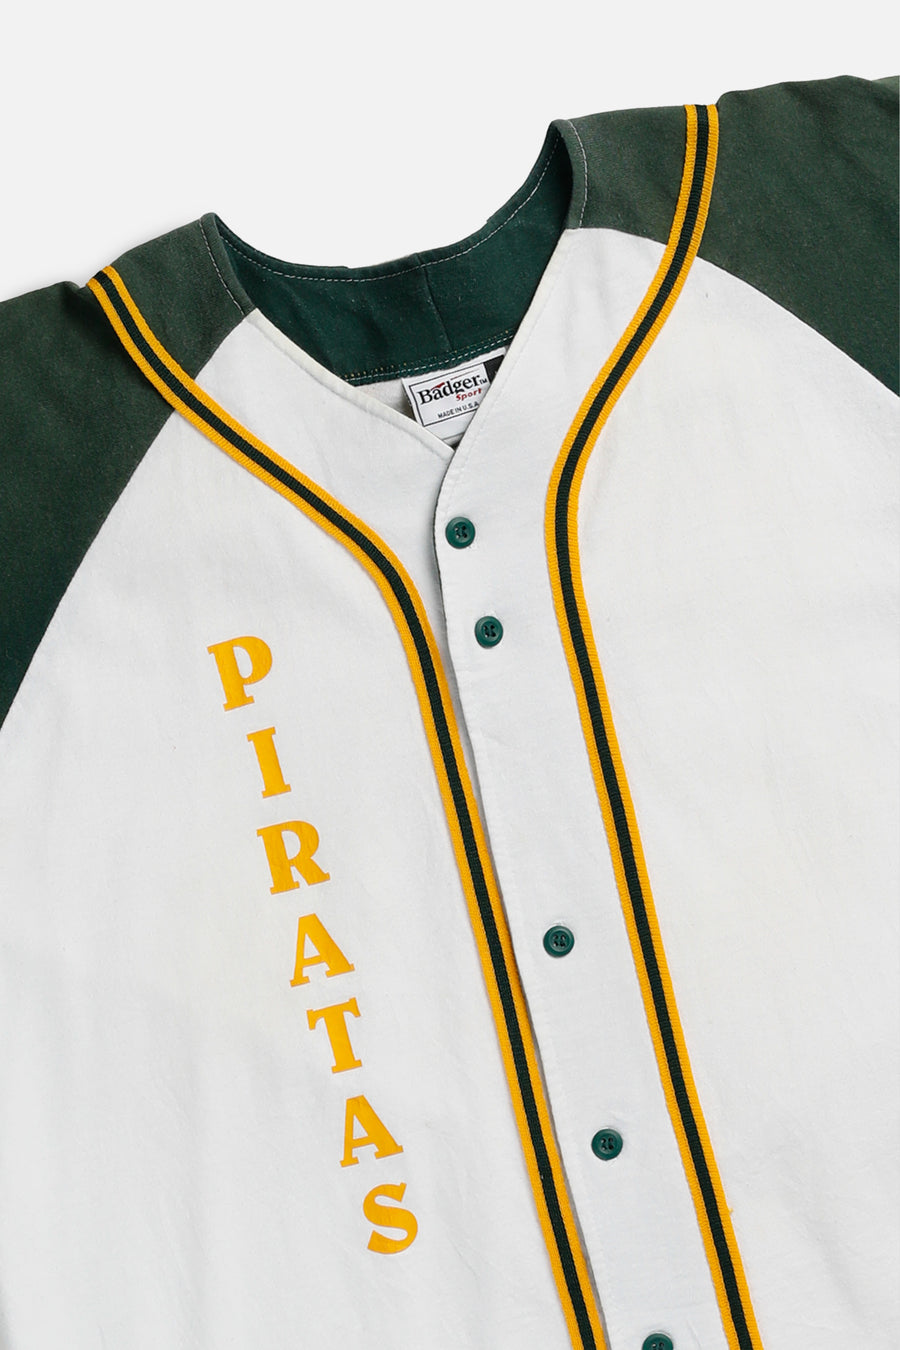 Vintage Pittsburg Pirates MLB Jersey - L